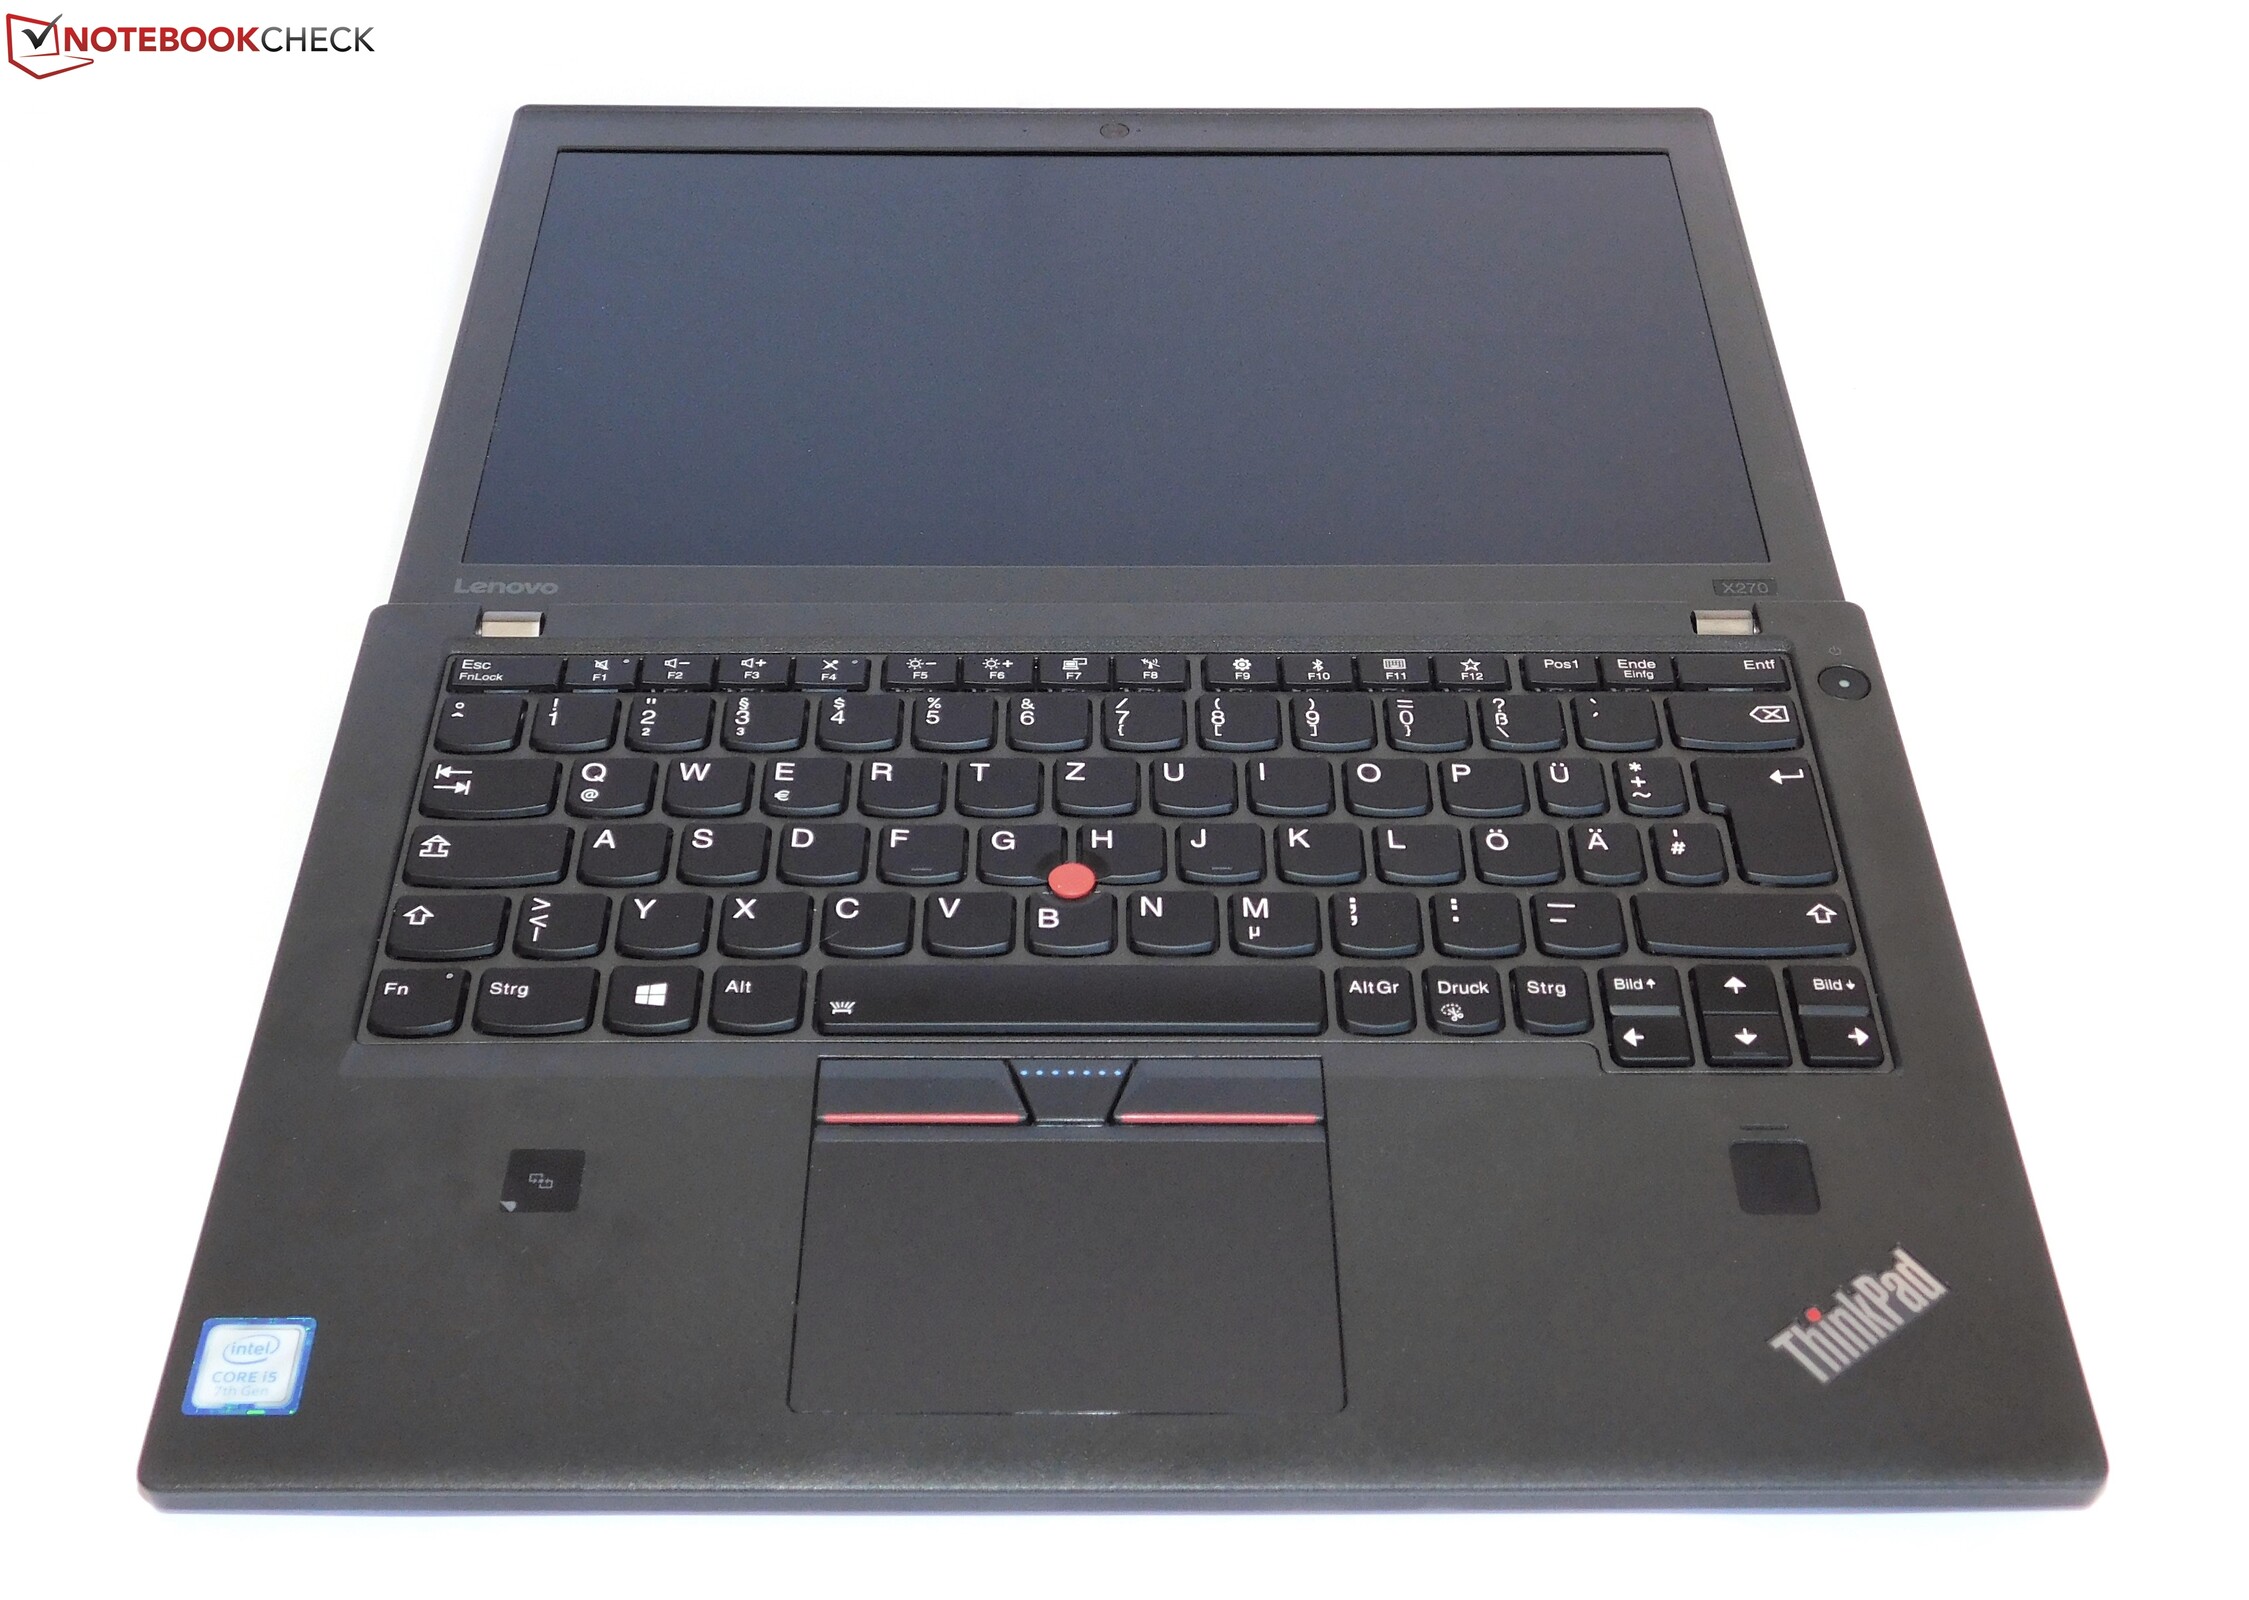 Lenovo Thinkpad X270 Core I5 Full Hd Laptop Review Notebookcheck Net Reviews